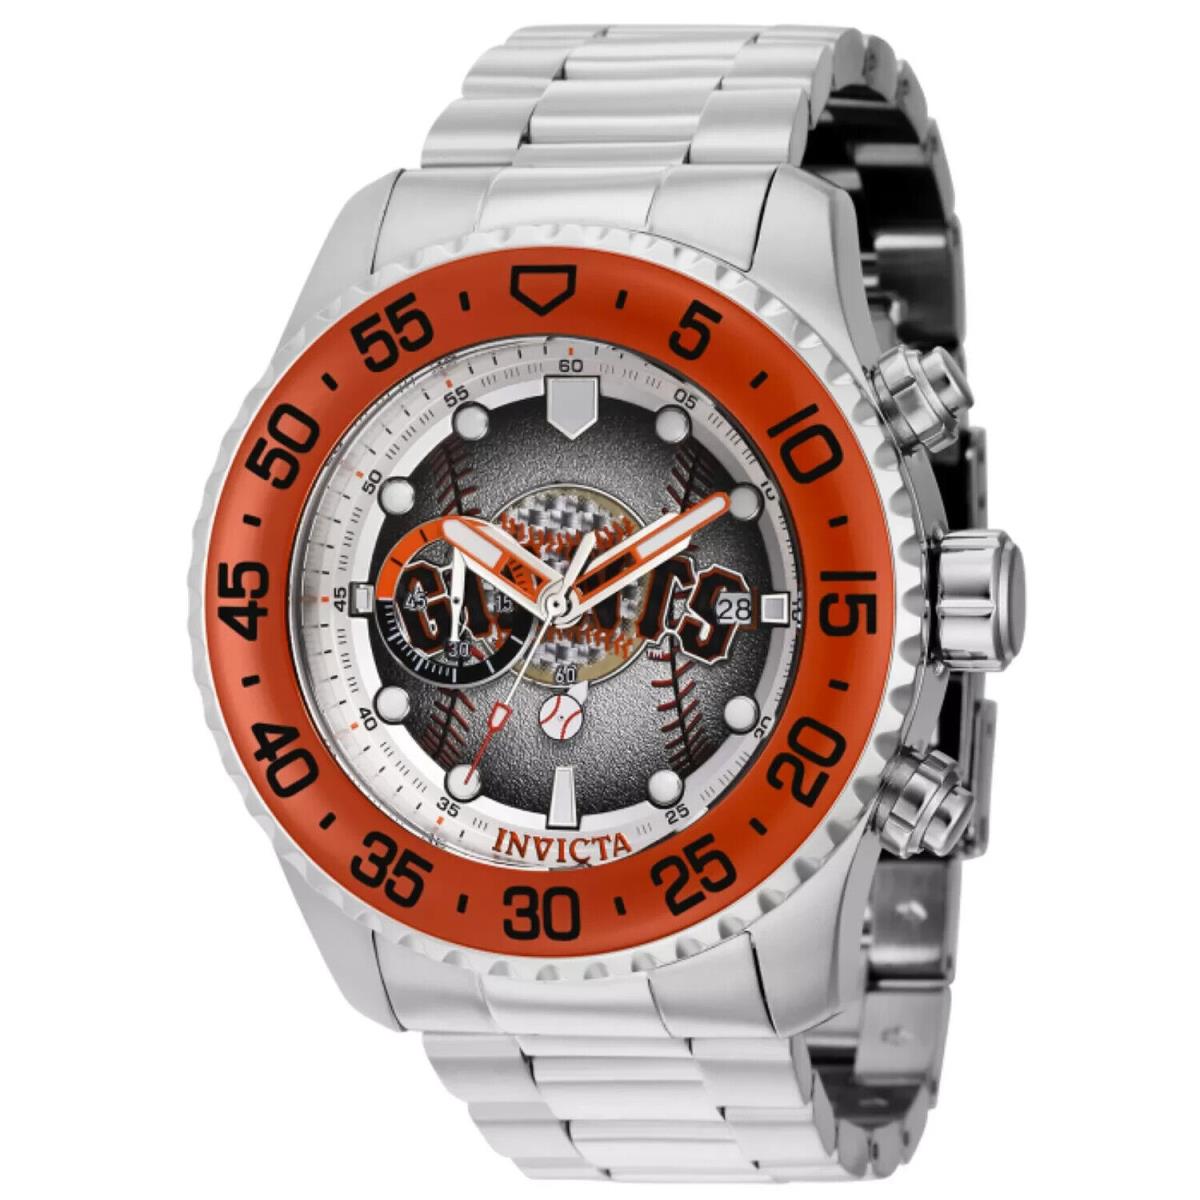 Pro Diver Invicta Mlb San Francisco Giants 40mm Chrono SS Quartz Watch 42775 - Dial: Black, Band: Silver, Bezel: Orange